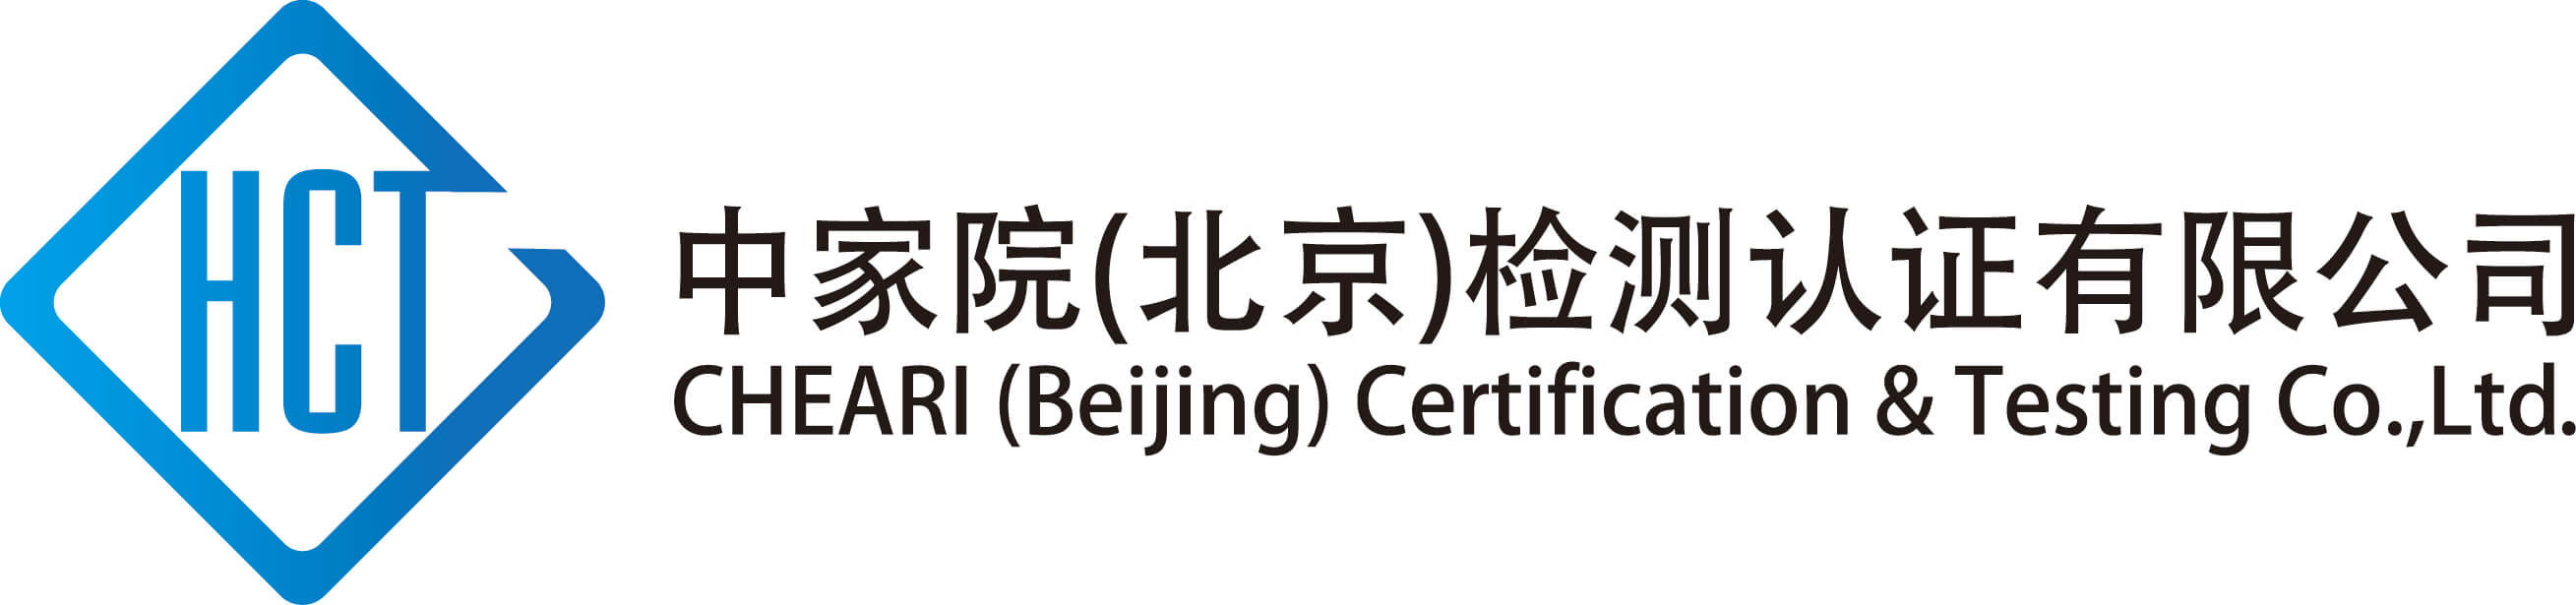 CHEARI (Beijing) Certification & Testing Co., Ltd